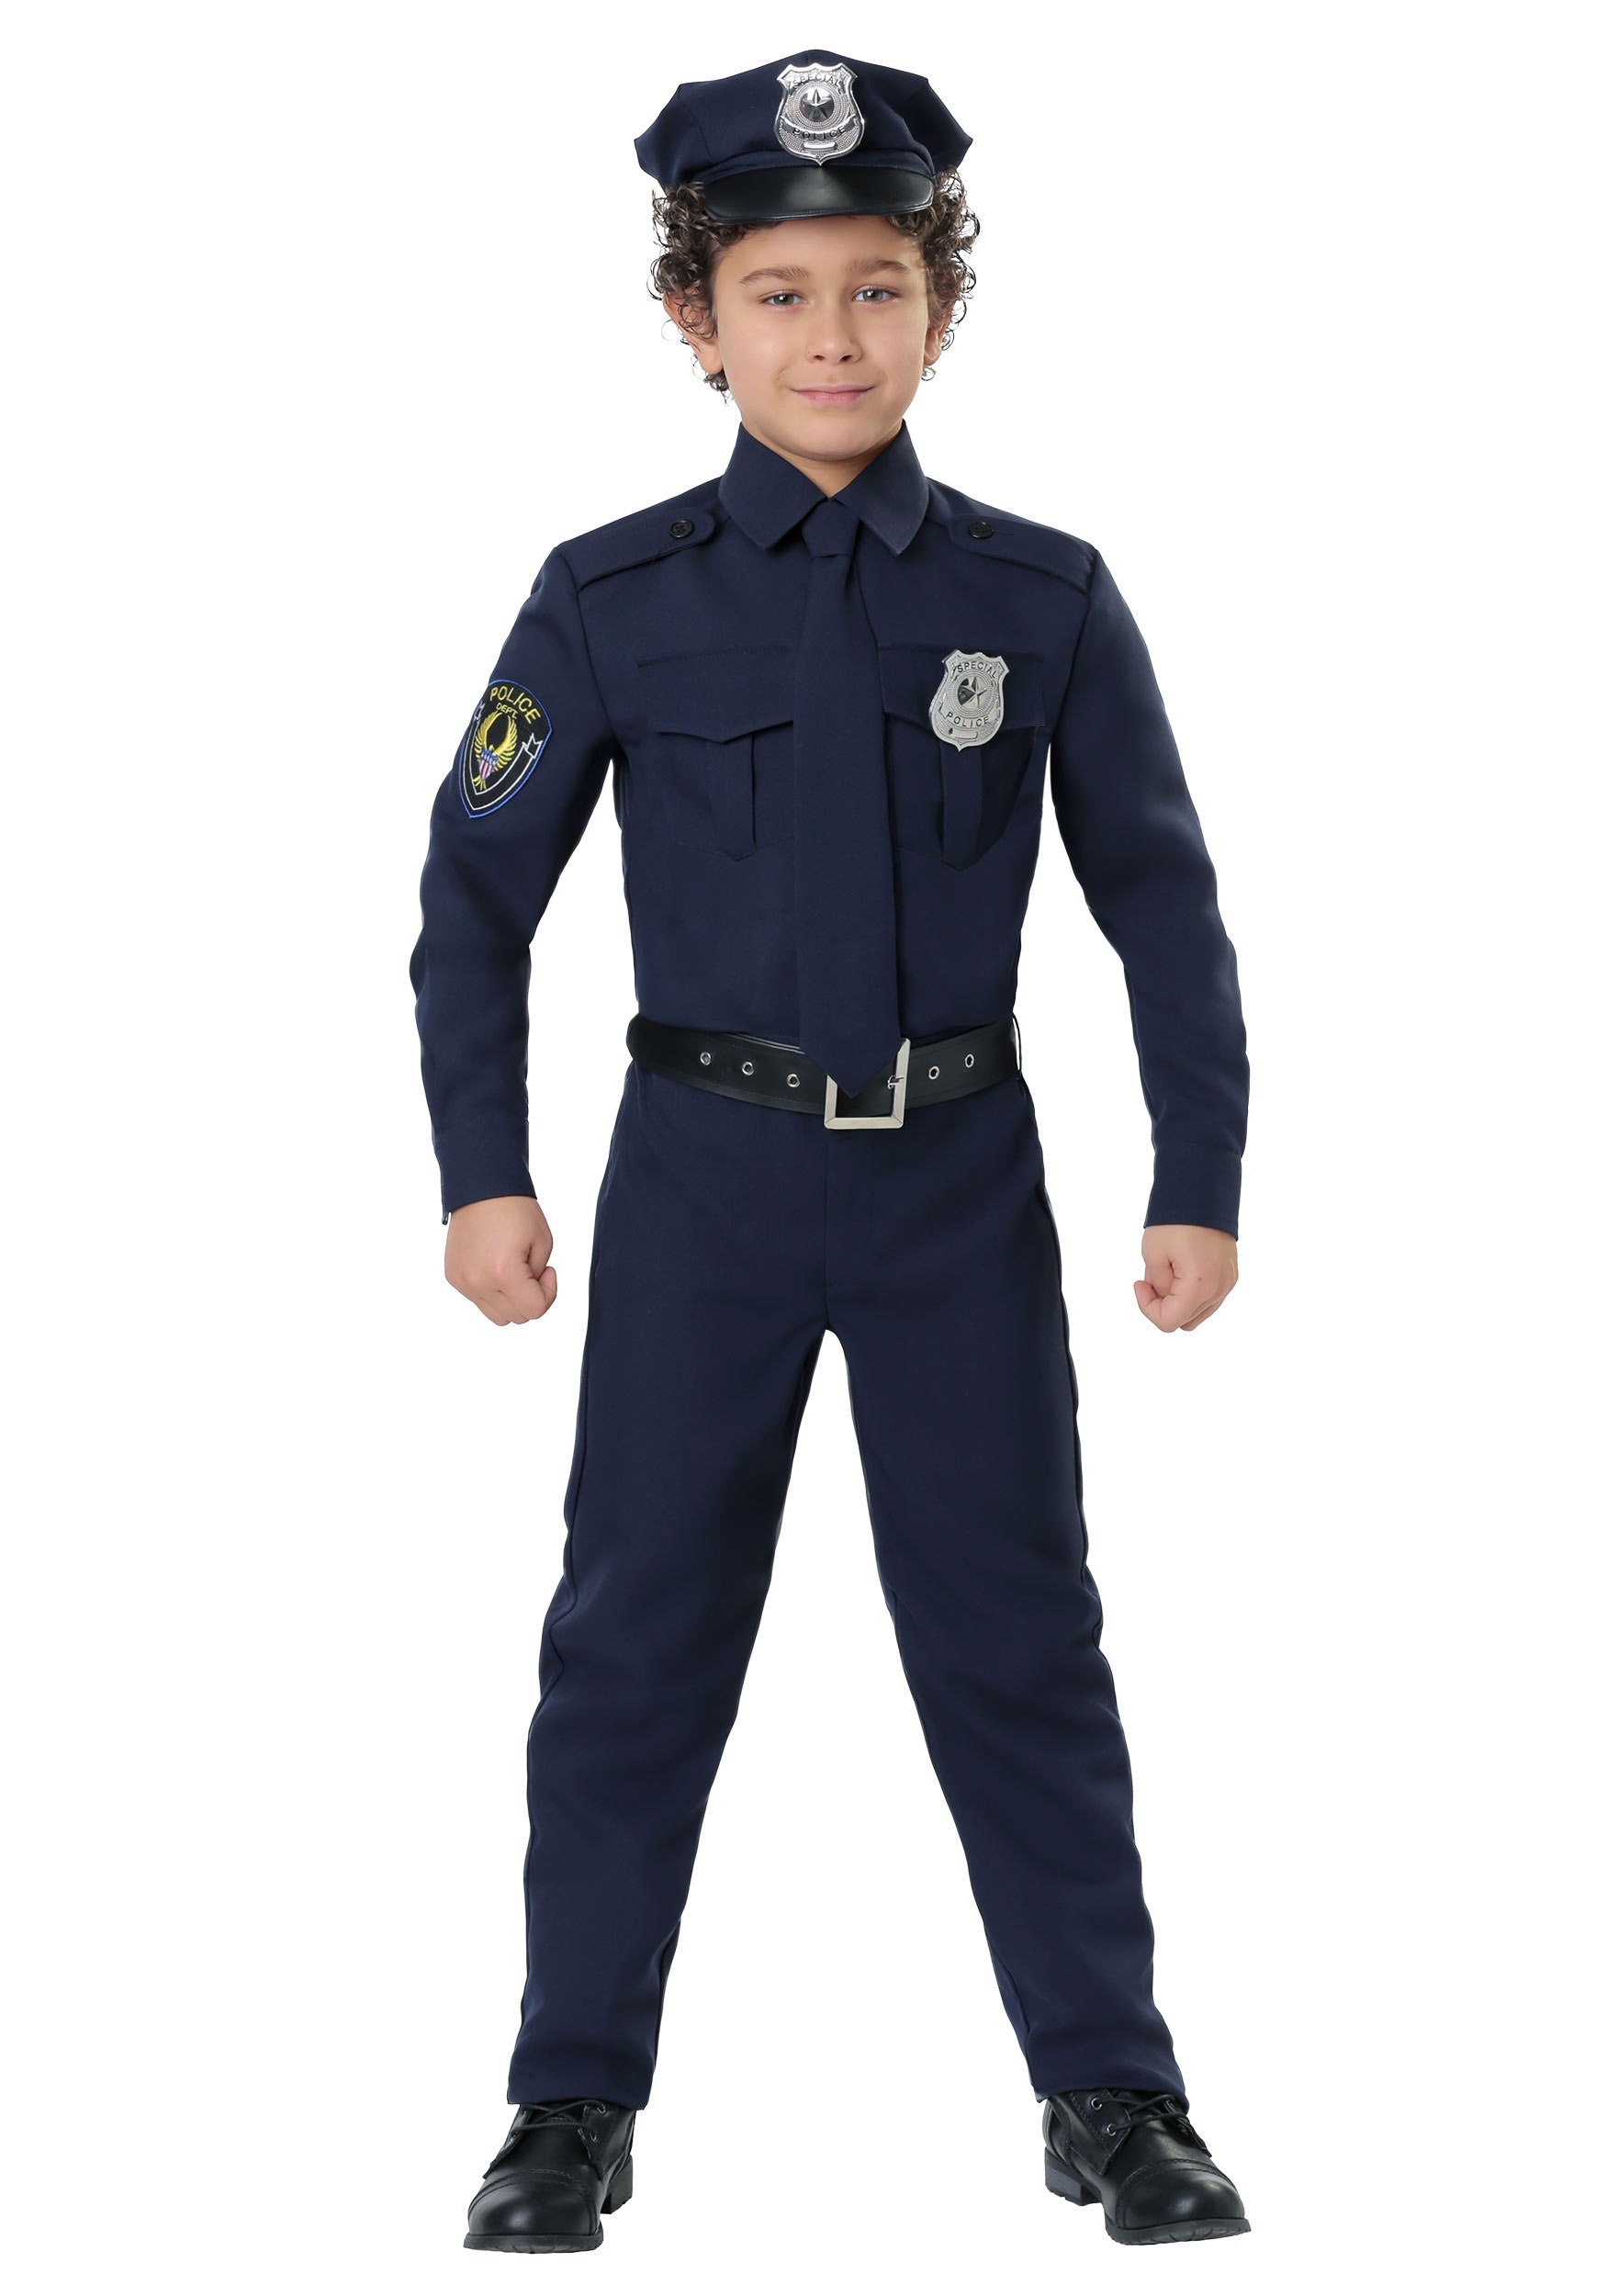 Child Cop Costume , Kid's Police Halloween Costumes